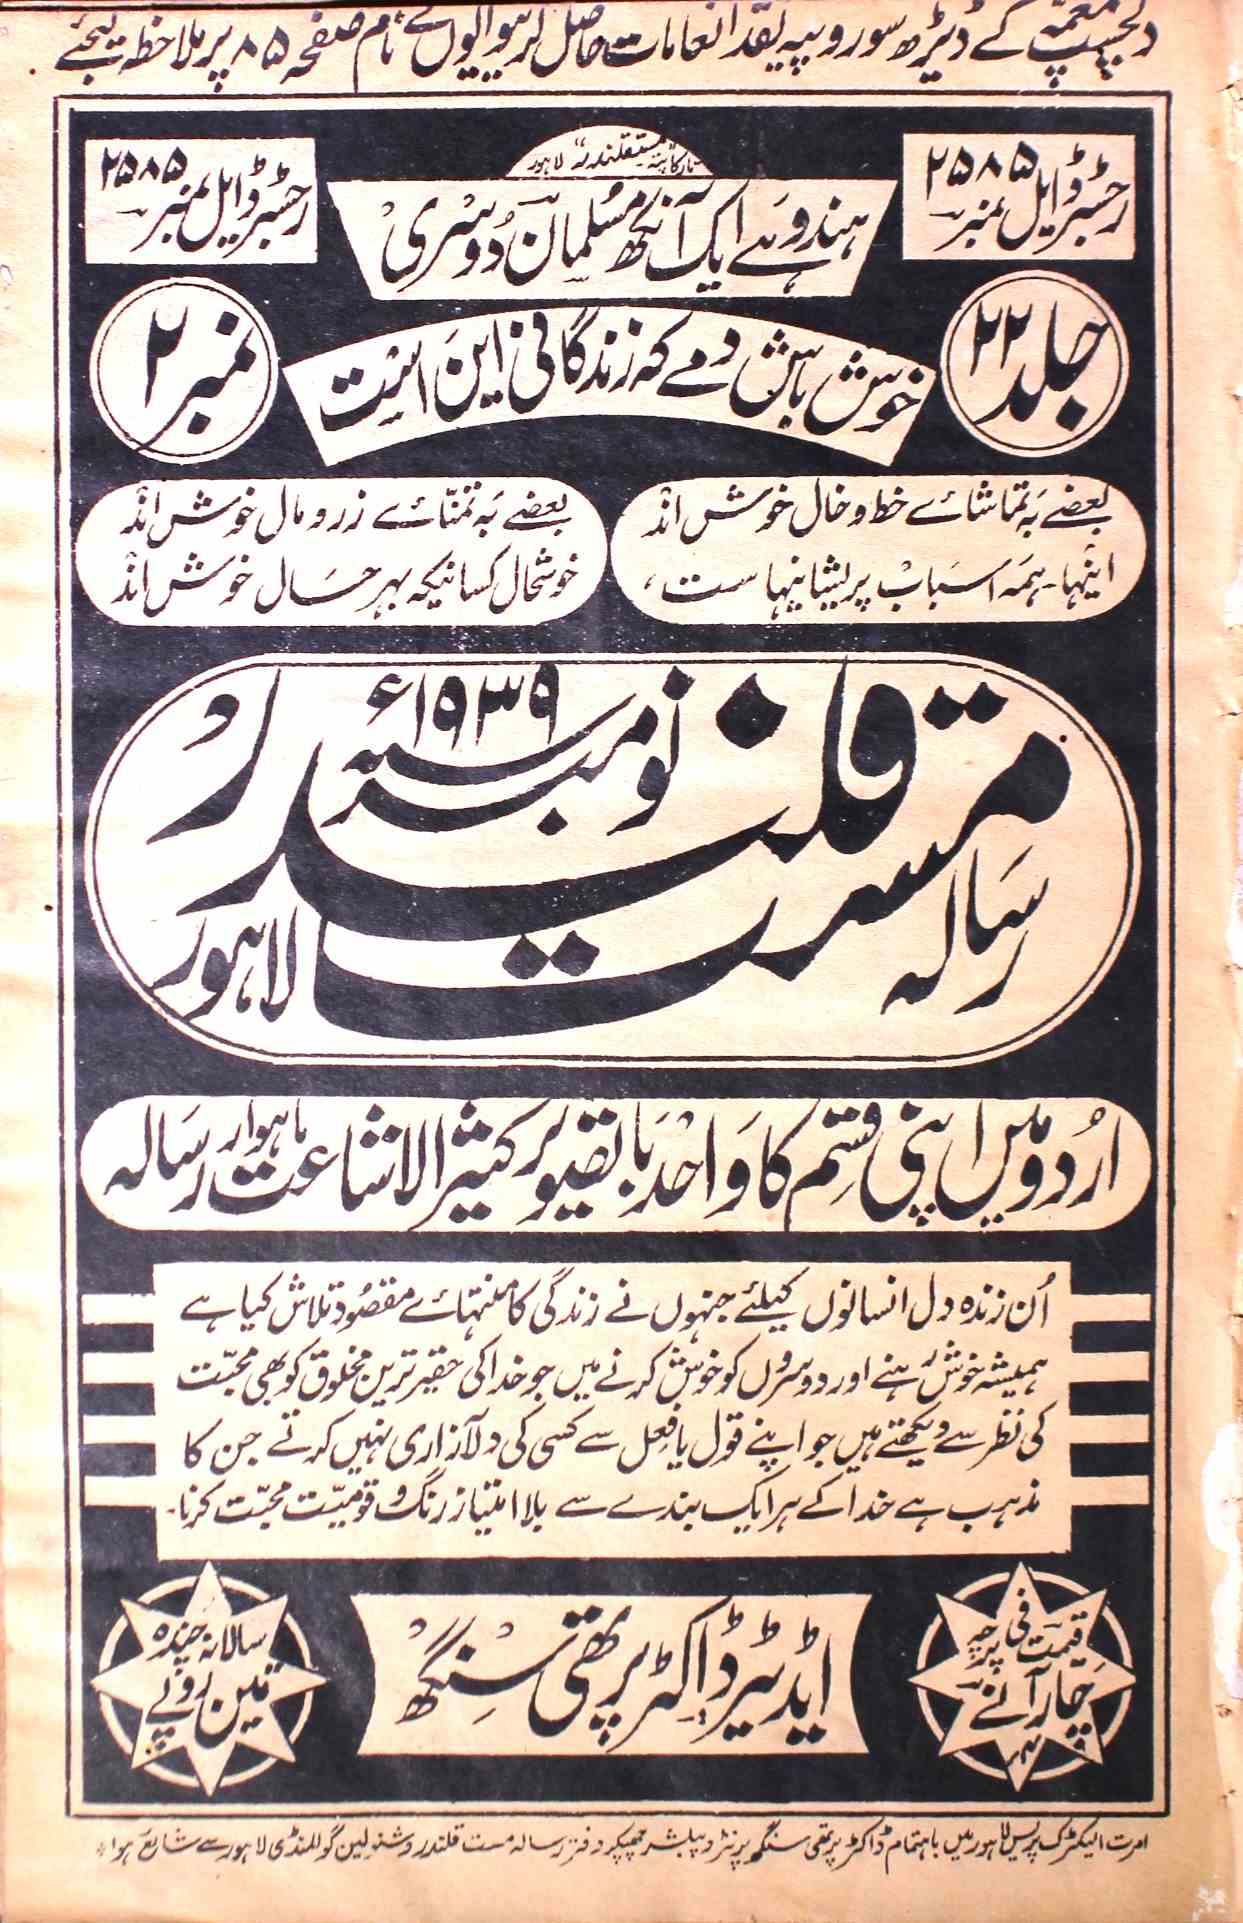 Mast Qalandar Jild 22 No 2 November 1939-SVK-Shumara Number-002